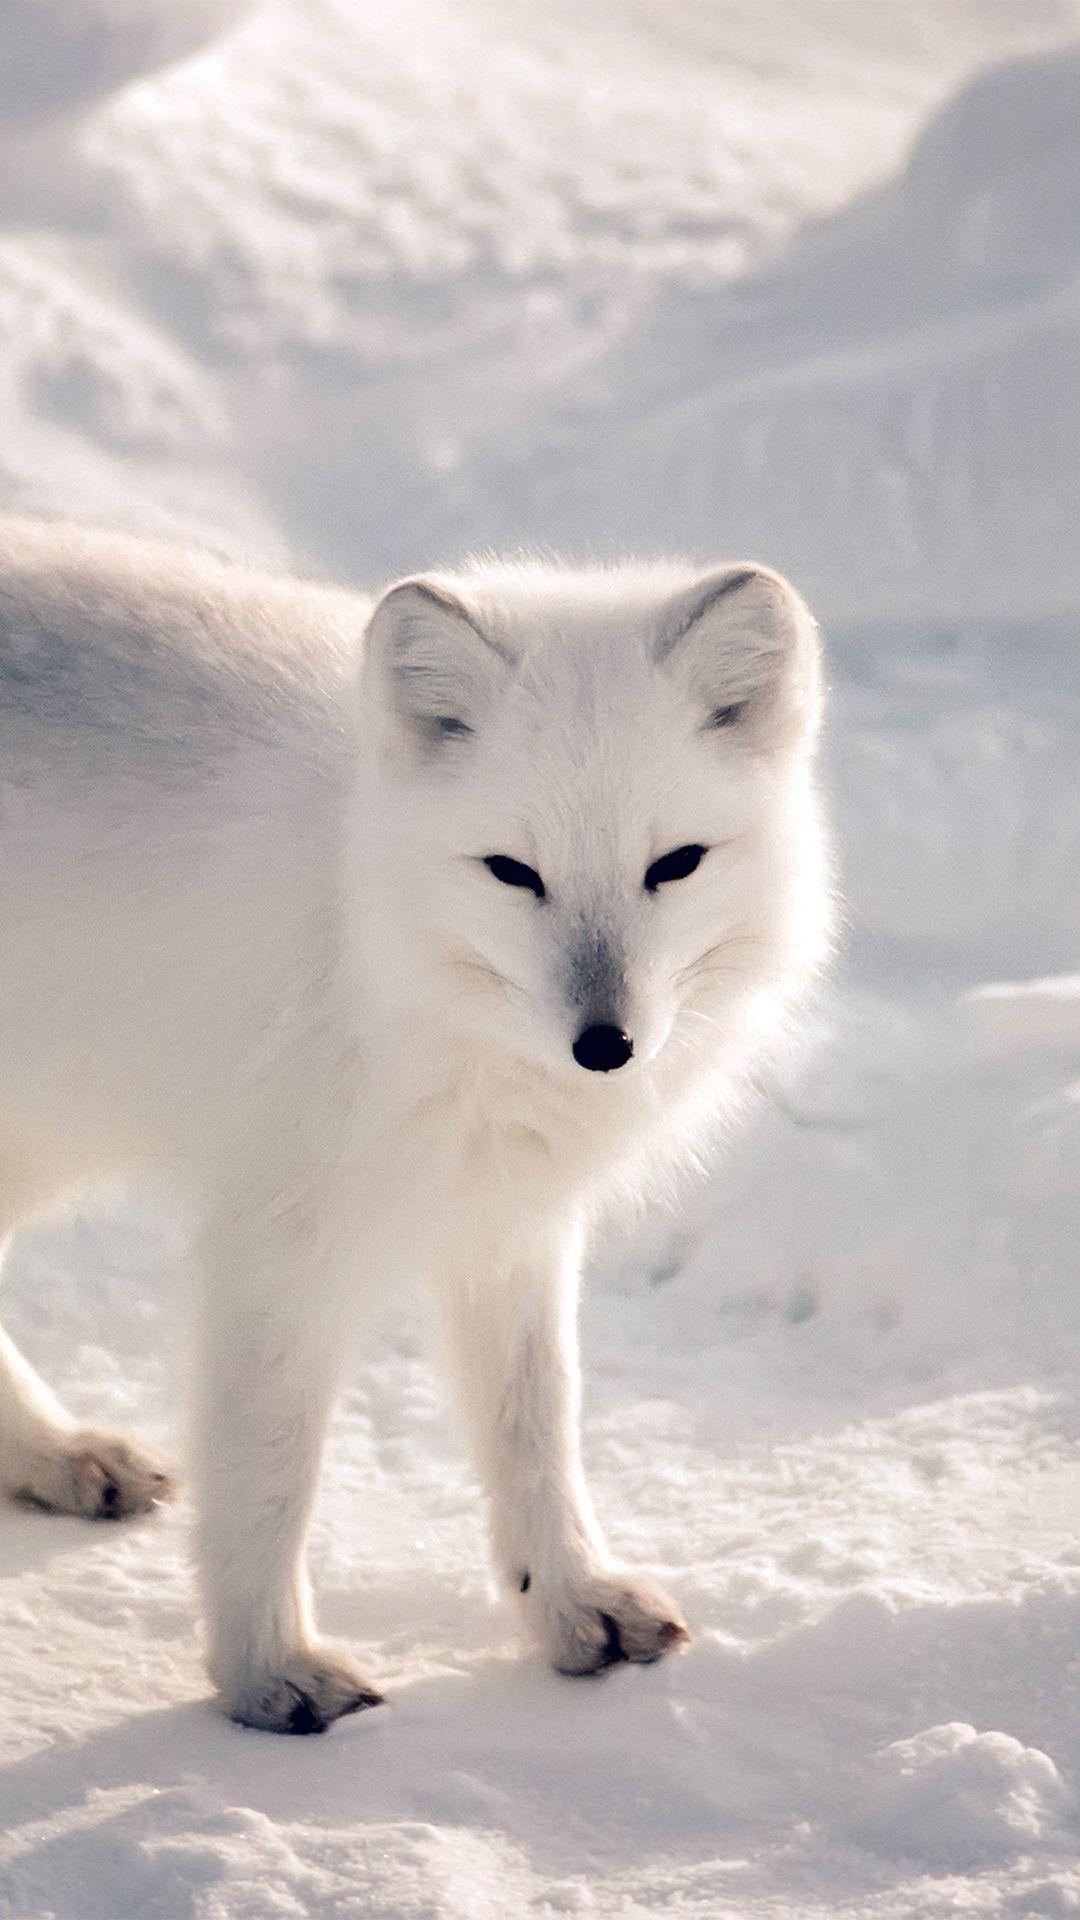 White Artic Fox Snow Winter Animal IPhone 6 Wallpaper Download. IPhone Wallpaper, IPad Wallpaper One Stop Downloa. Snow Animals, Arctic Animals, Winter Animals